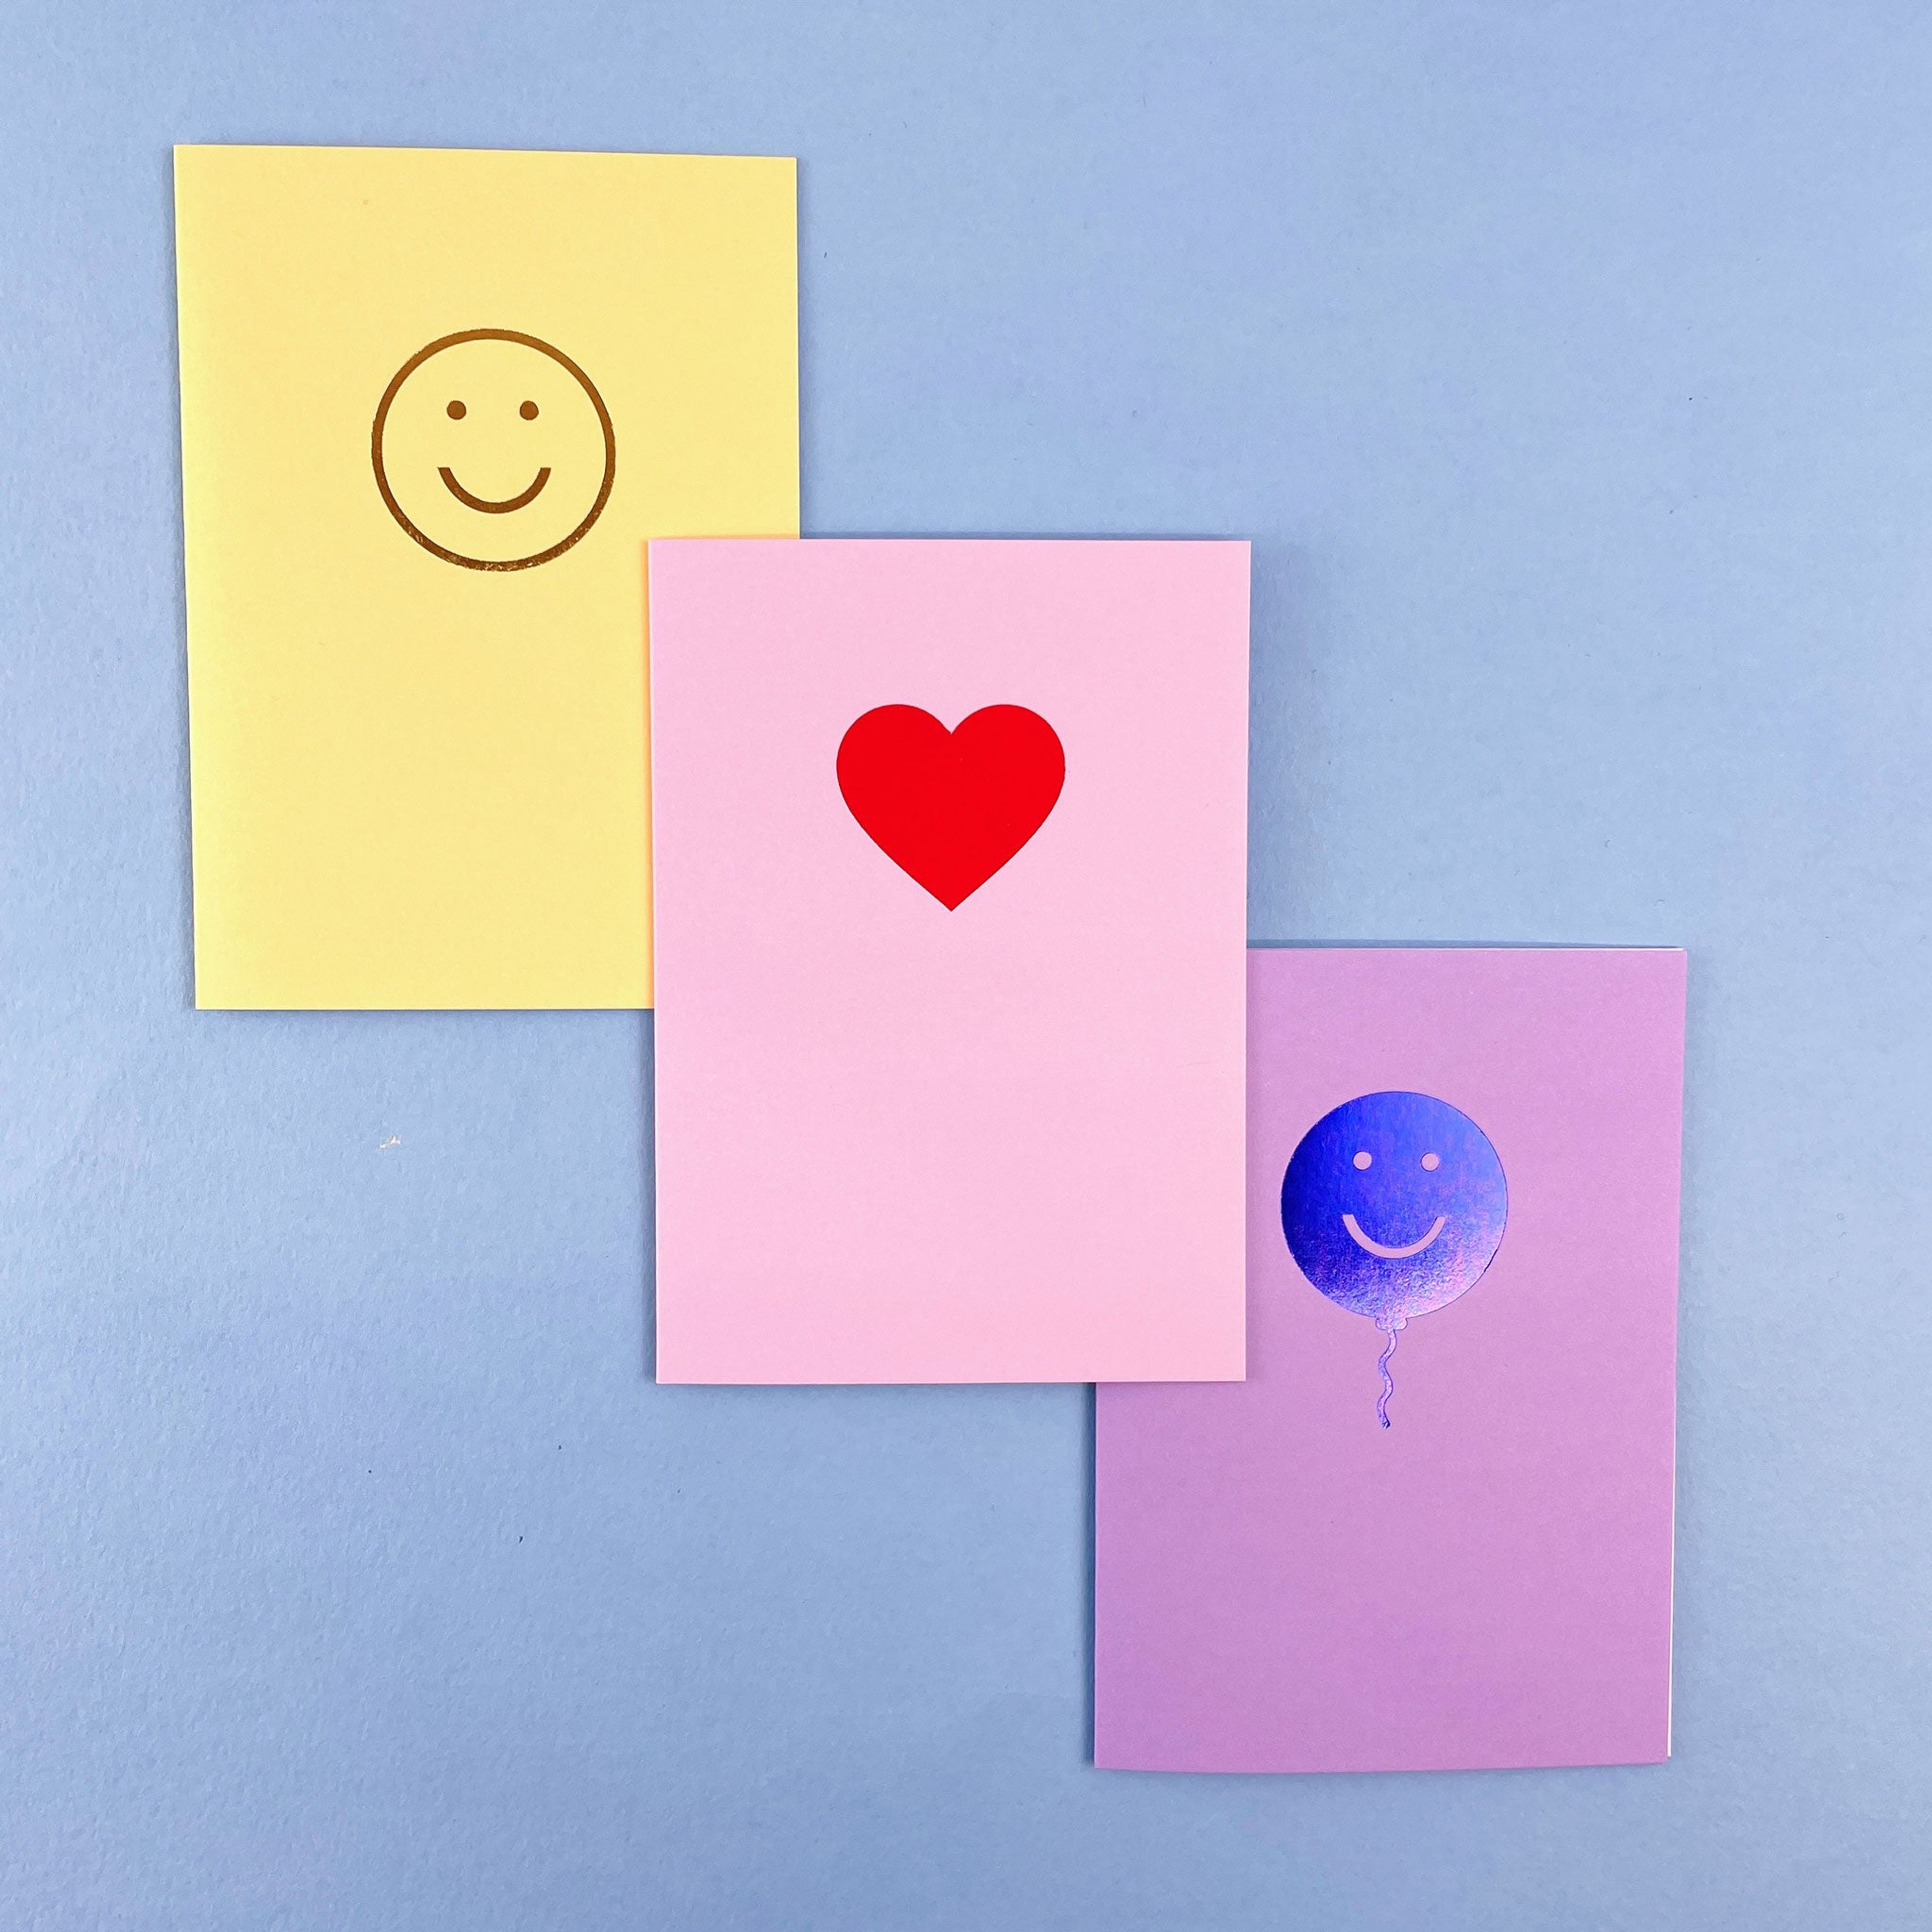 NEW: Emoji bundle - 3 cards